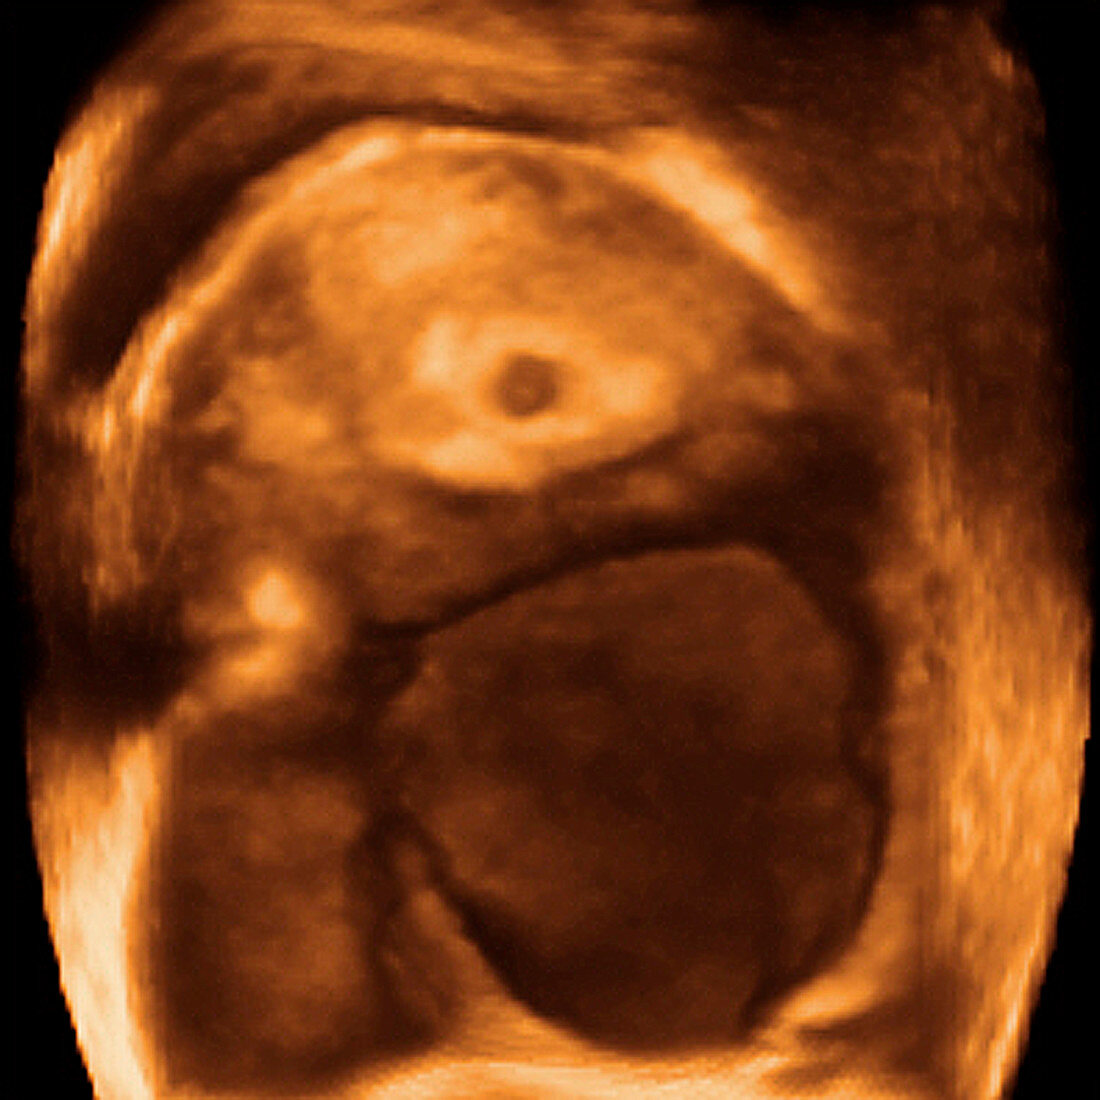 5 week embryo,3-D ultrasound scan